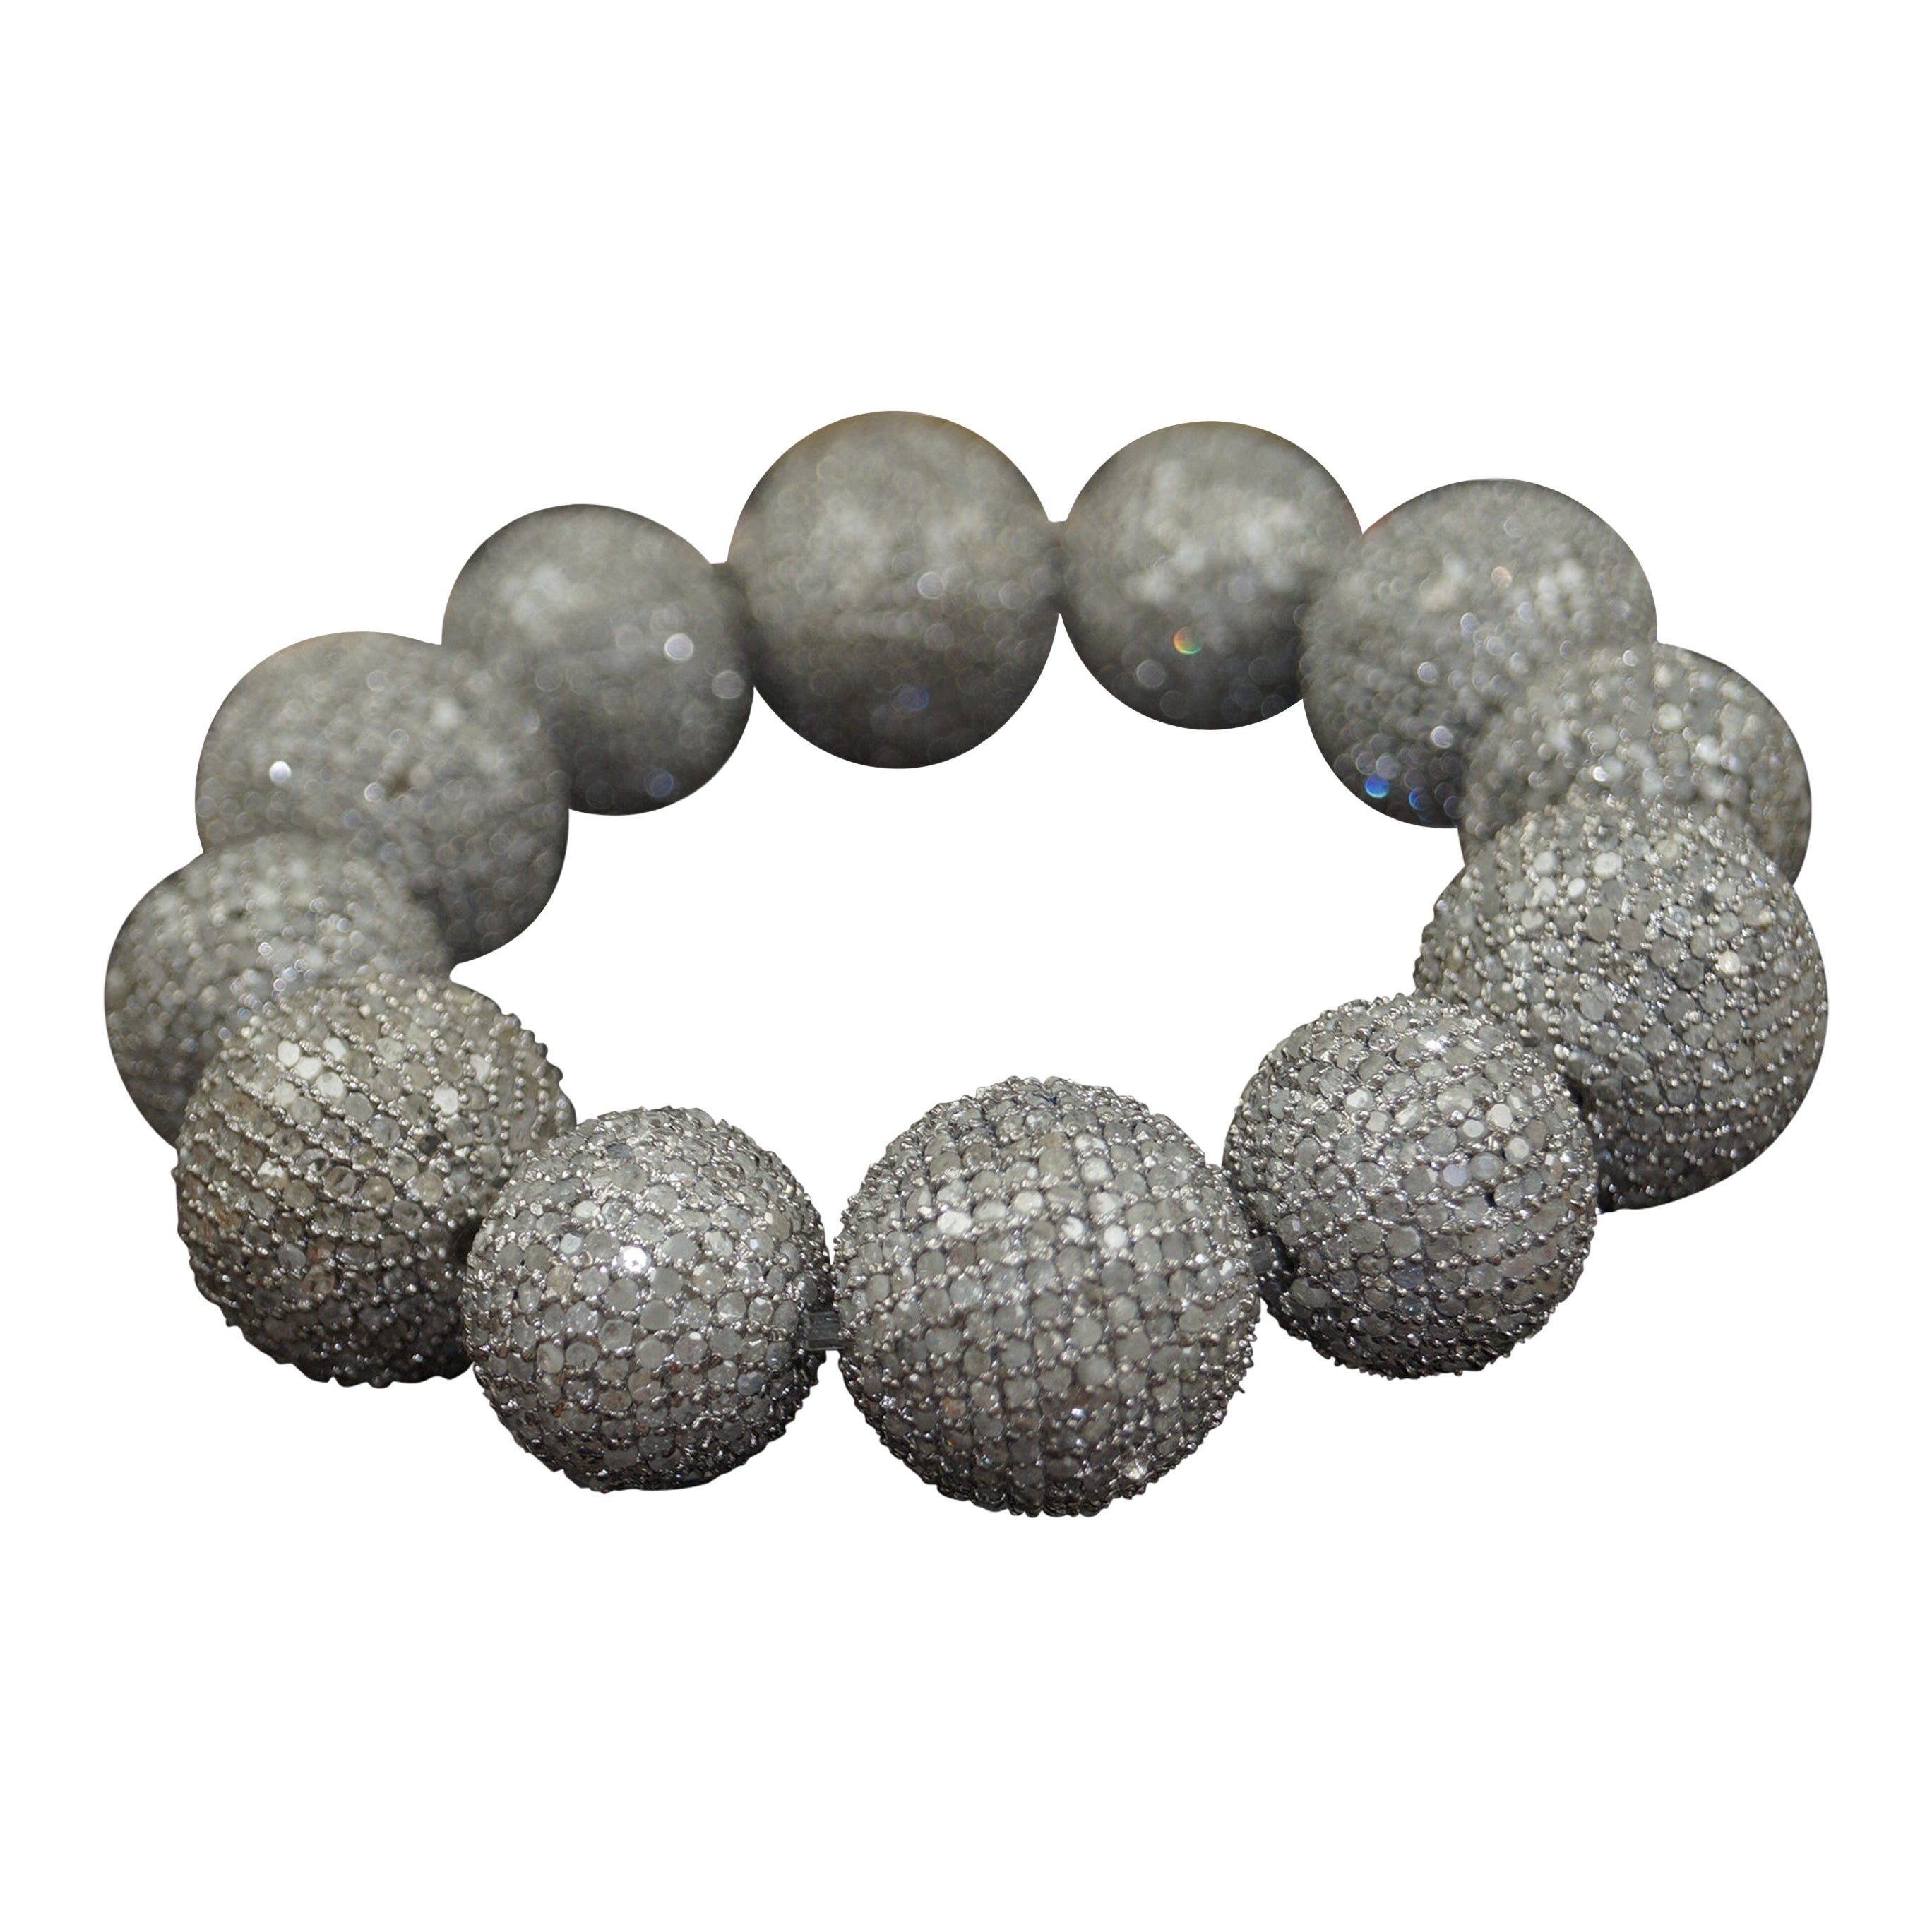 Real classy pave diamond oxidized sterling silver bead ball bracelet